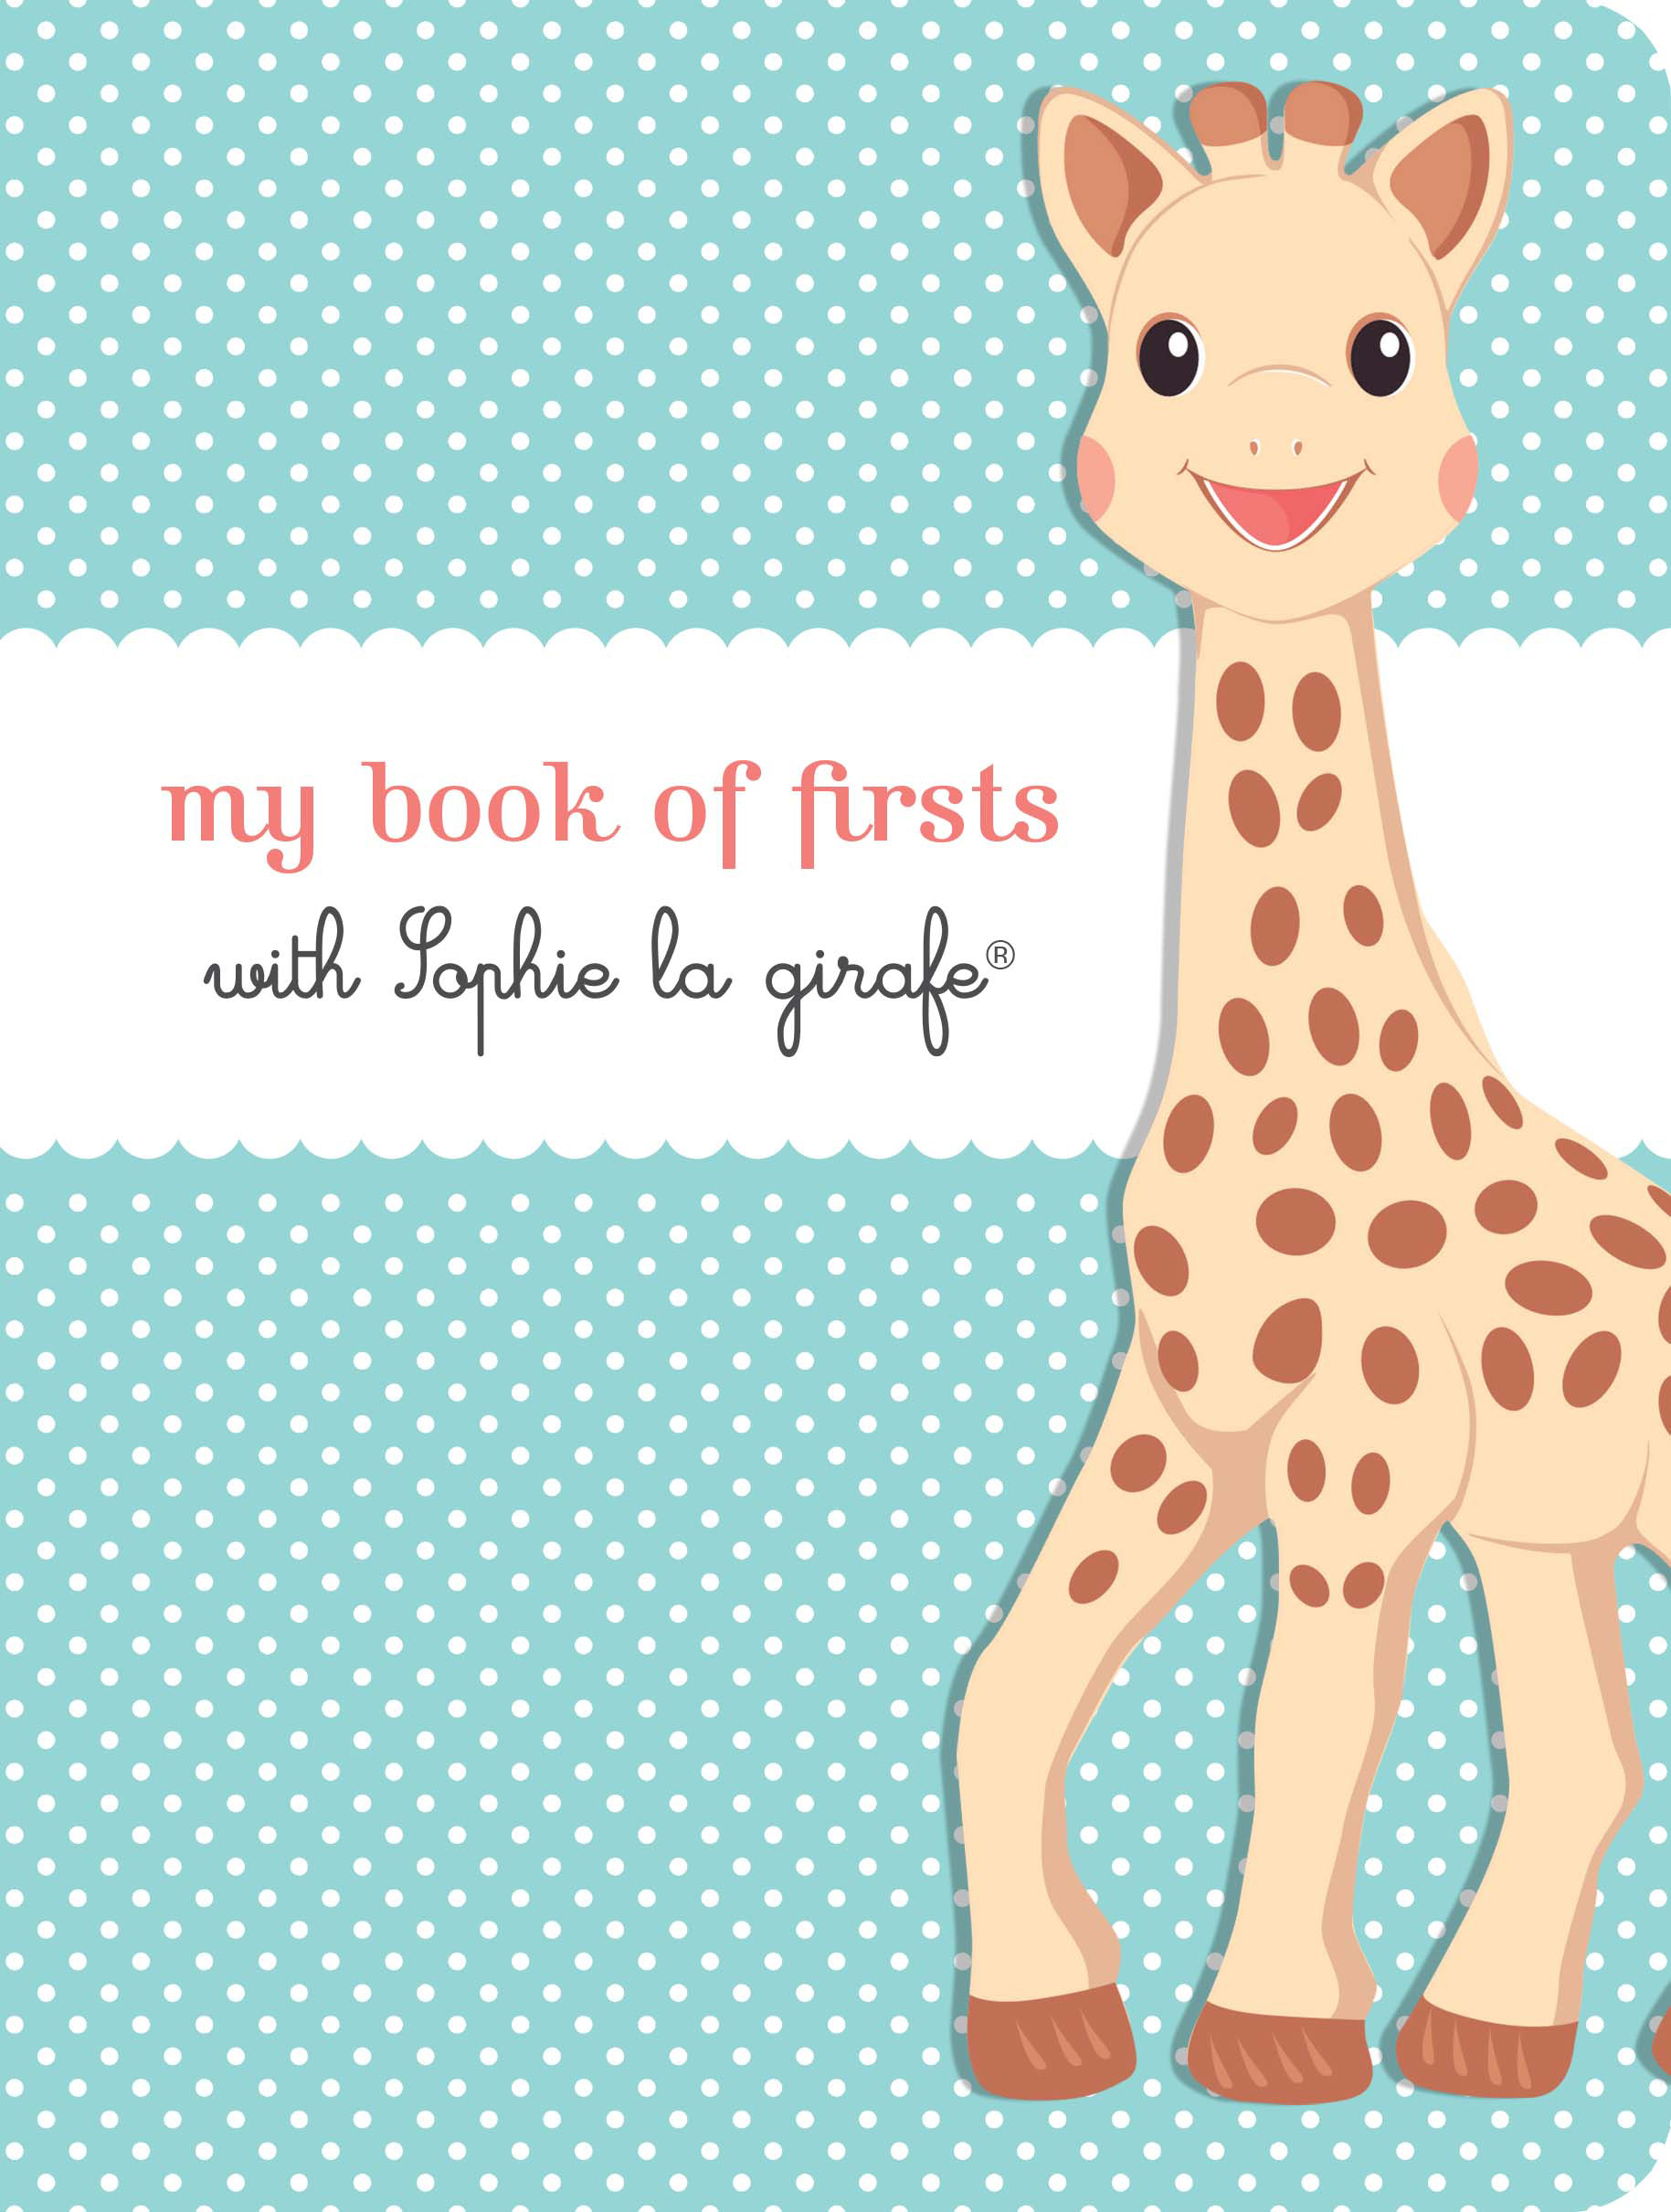 La jirafa Sophie - Free stories online. Create books for kids